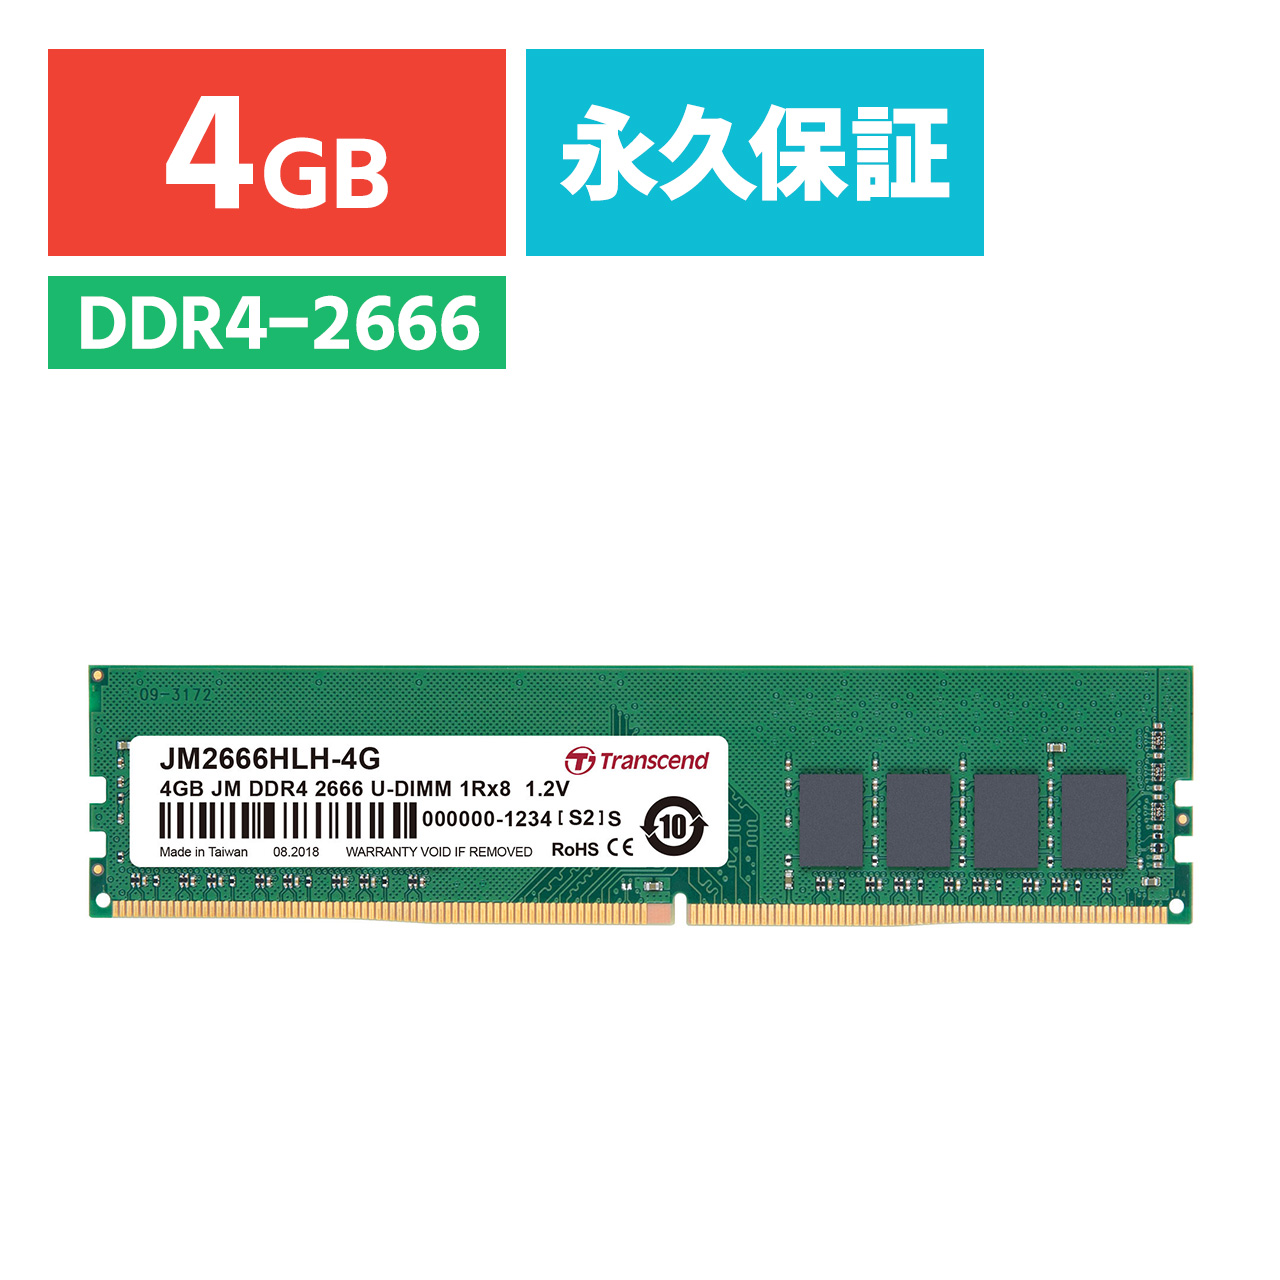 Transcend fXNgbvp 4GB DDR4-2666 PC4-21300 U-DIMM JM2666HLH-4G JM2666HLH-4G